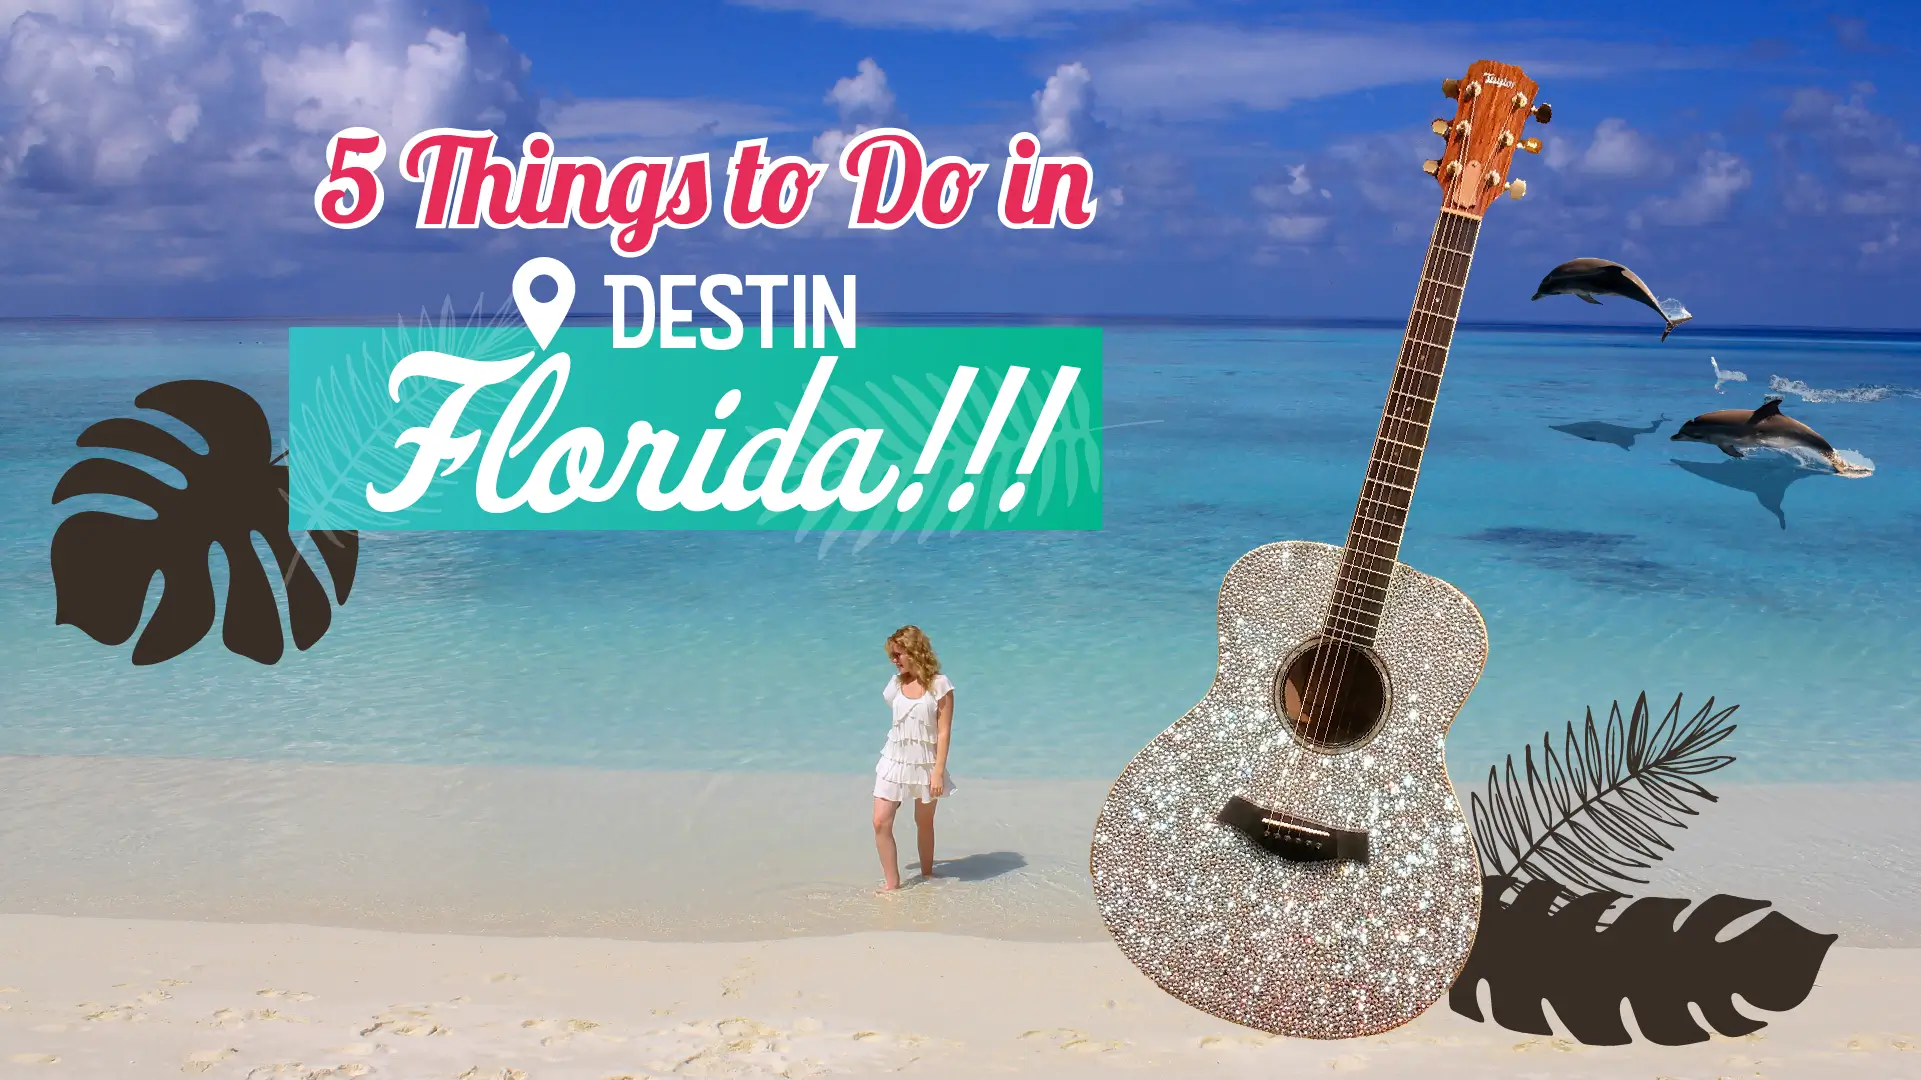 Destin Florida vacation guide - Taylor Swift Florida Inspired